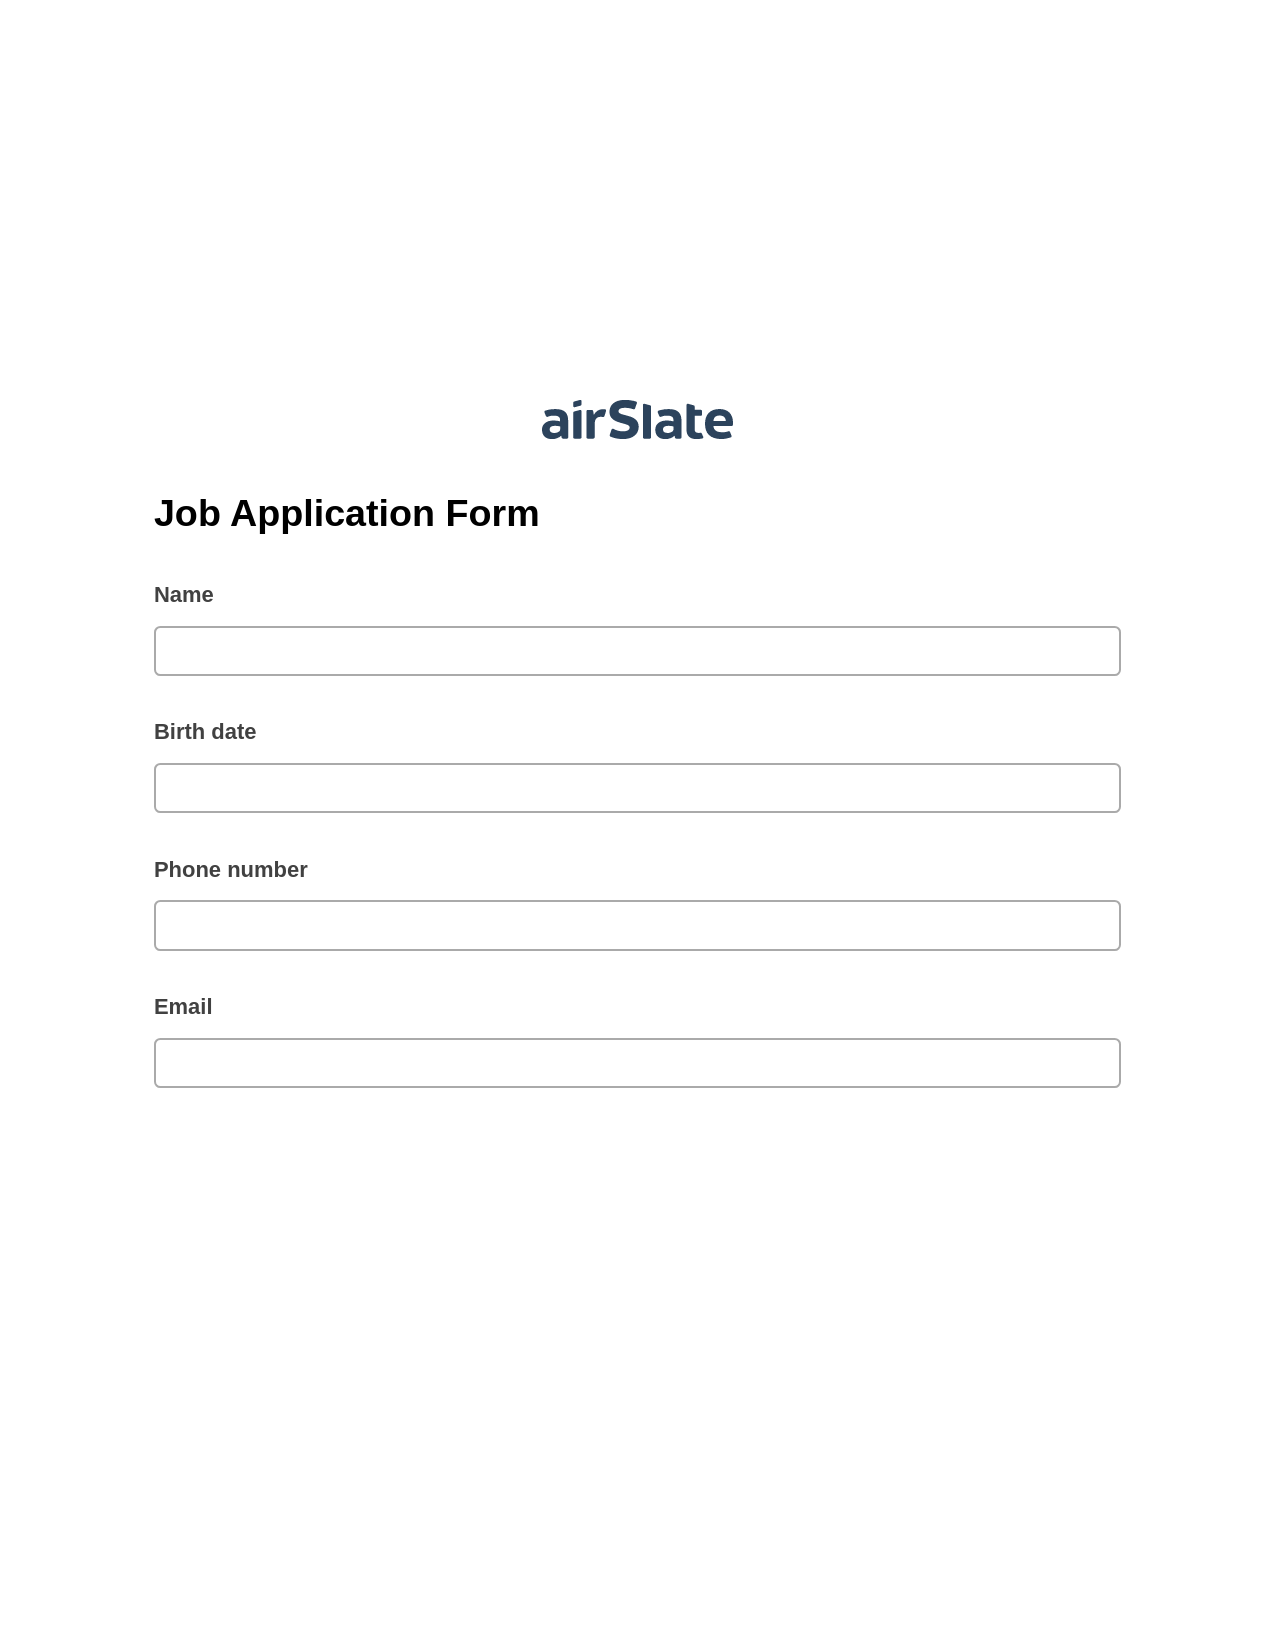 Multirole Job Application Form Pre-fill from CSV File Dropdown Options Bot, Audit Trail Bot, Google Drive Bot